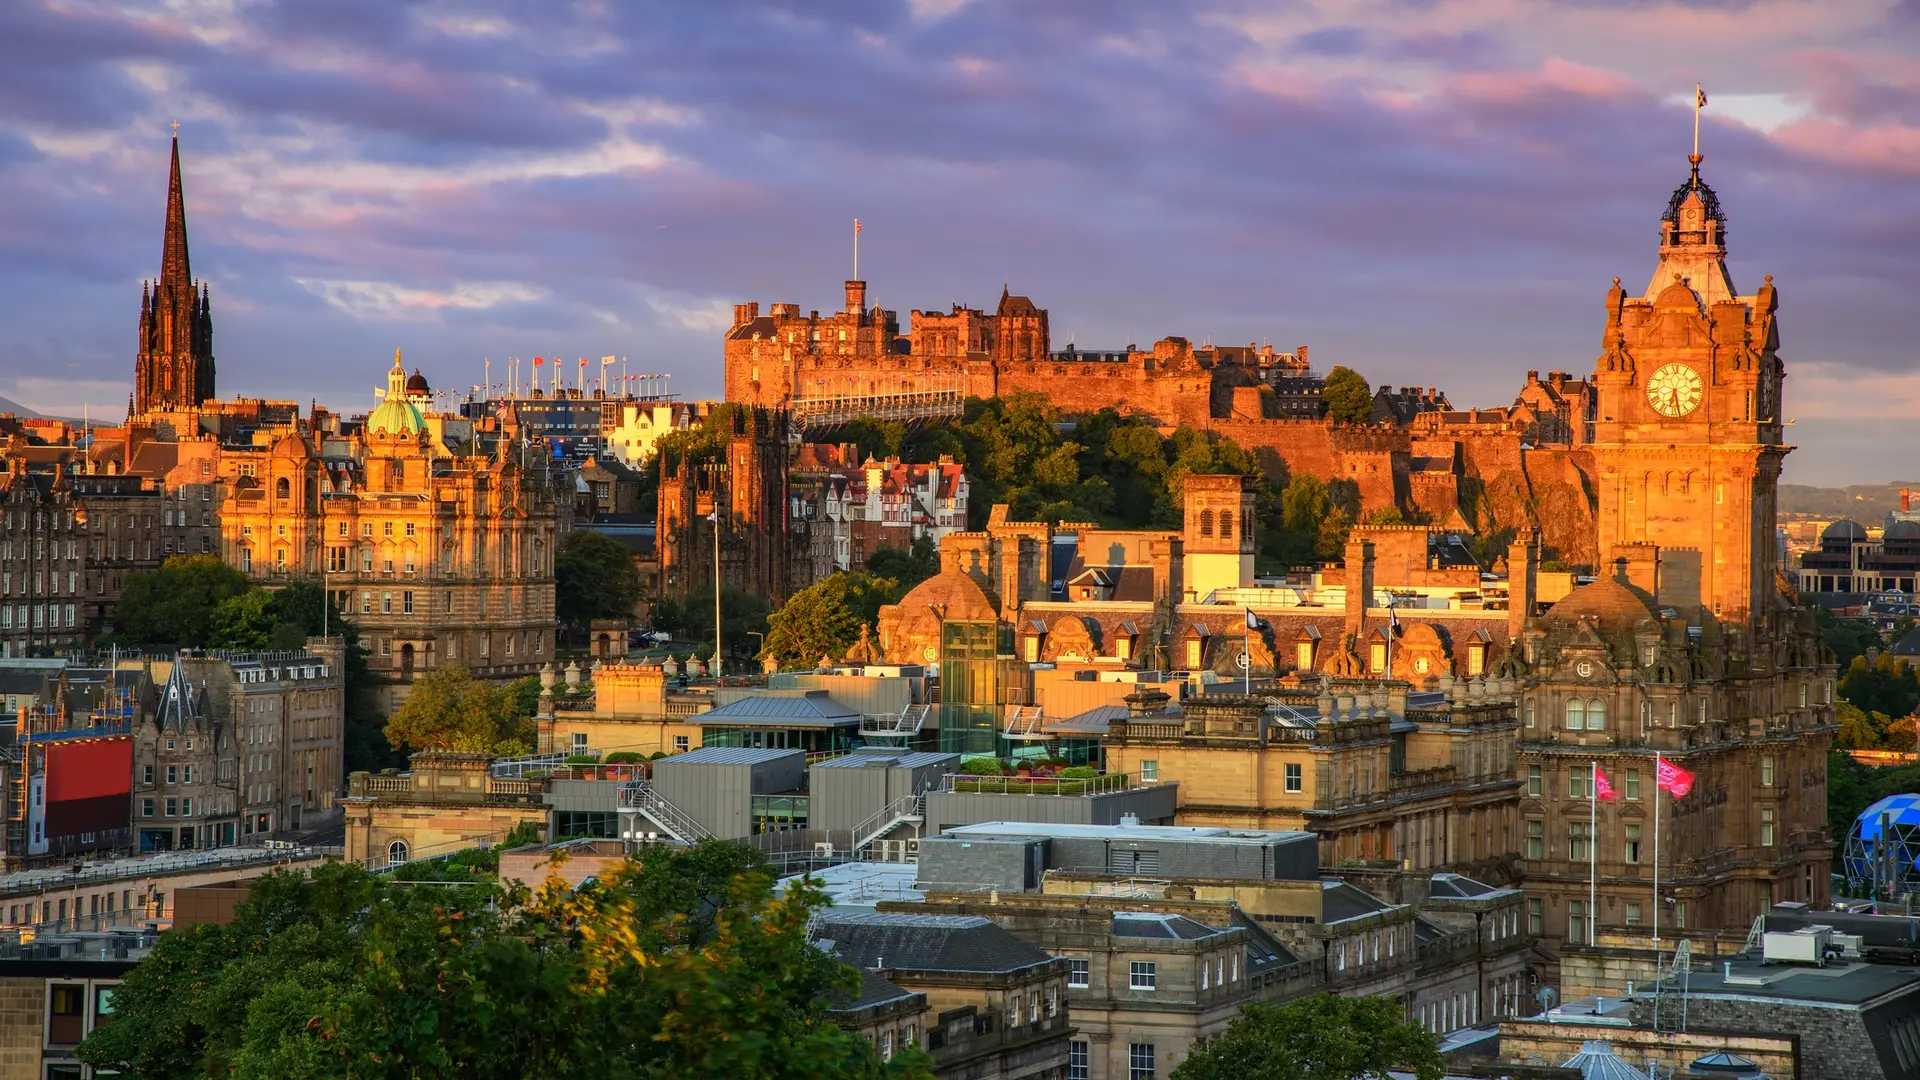 Amazing view of clocktowers, historical buildings and beautiful sky in Edinburgh -Scotland.